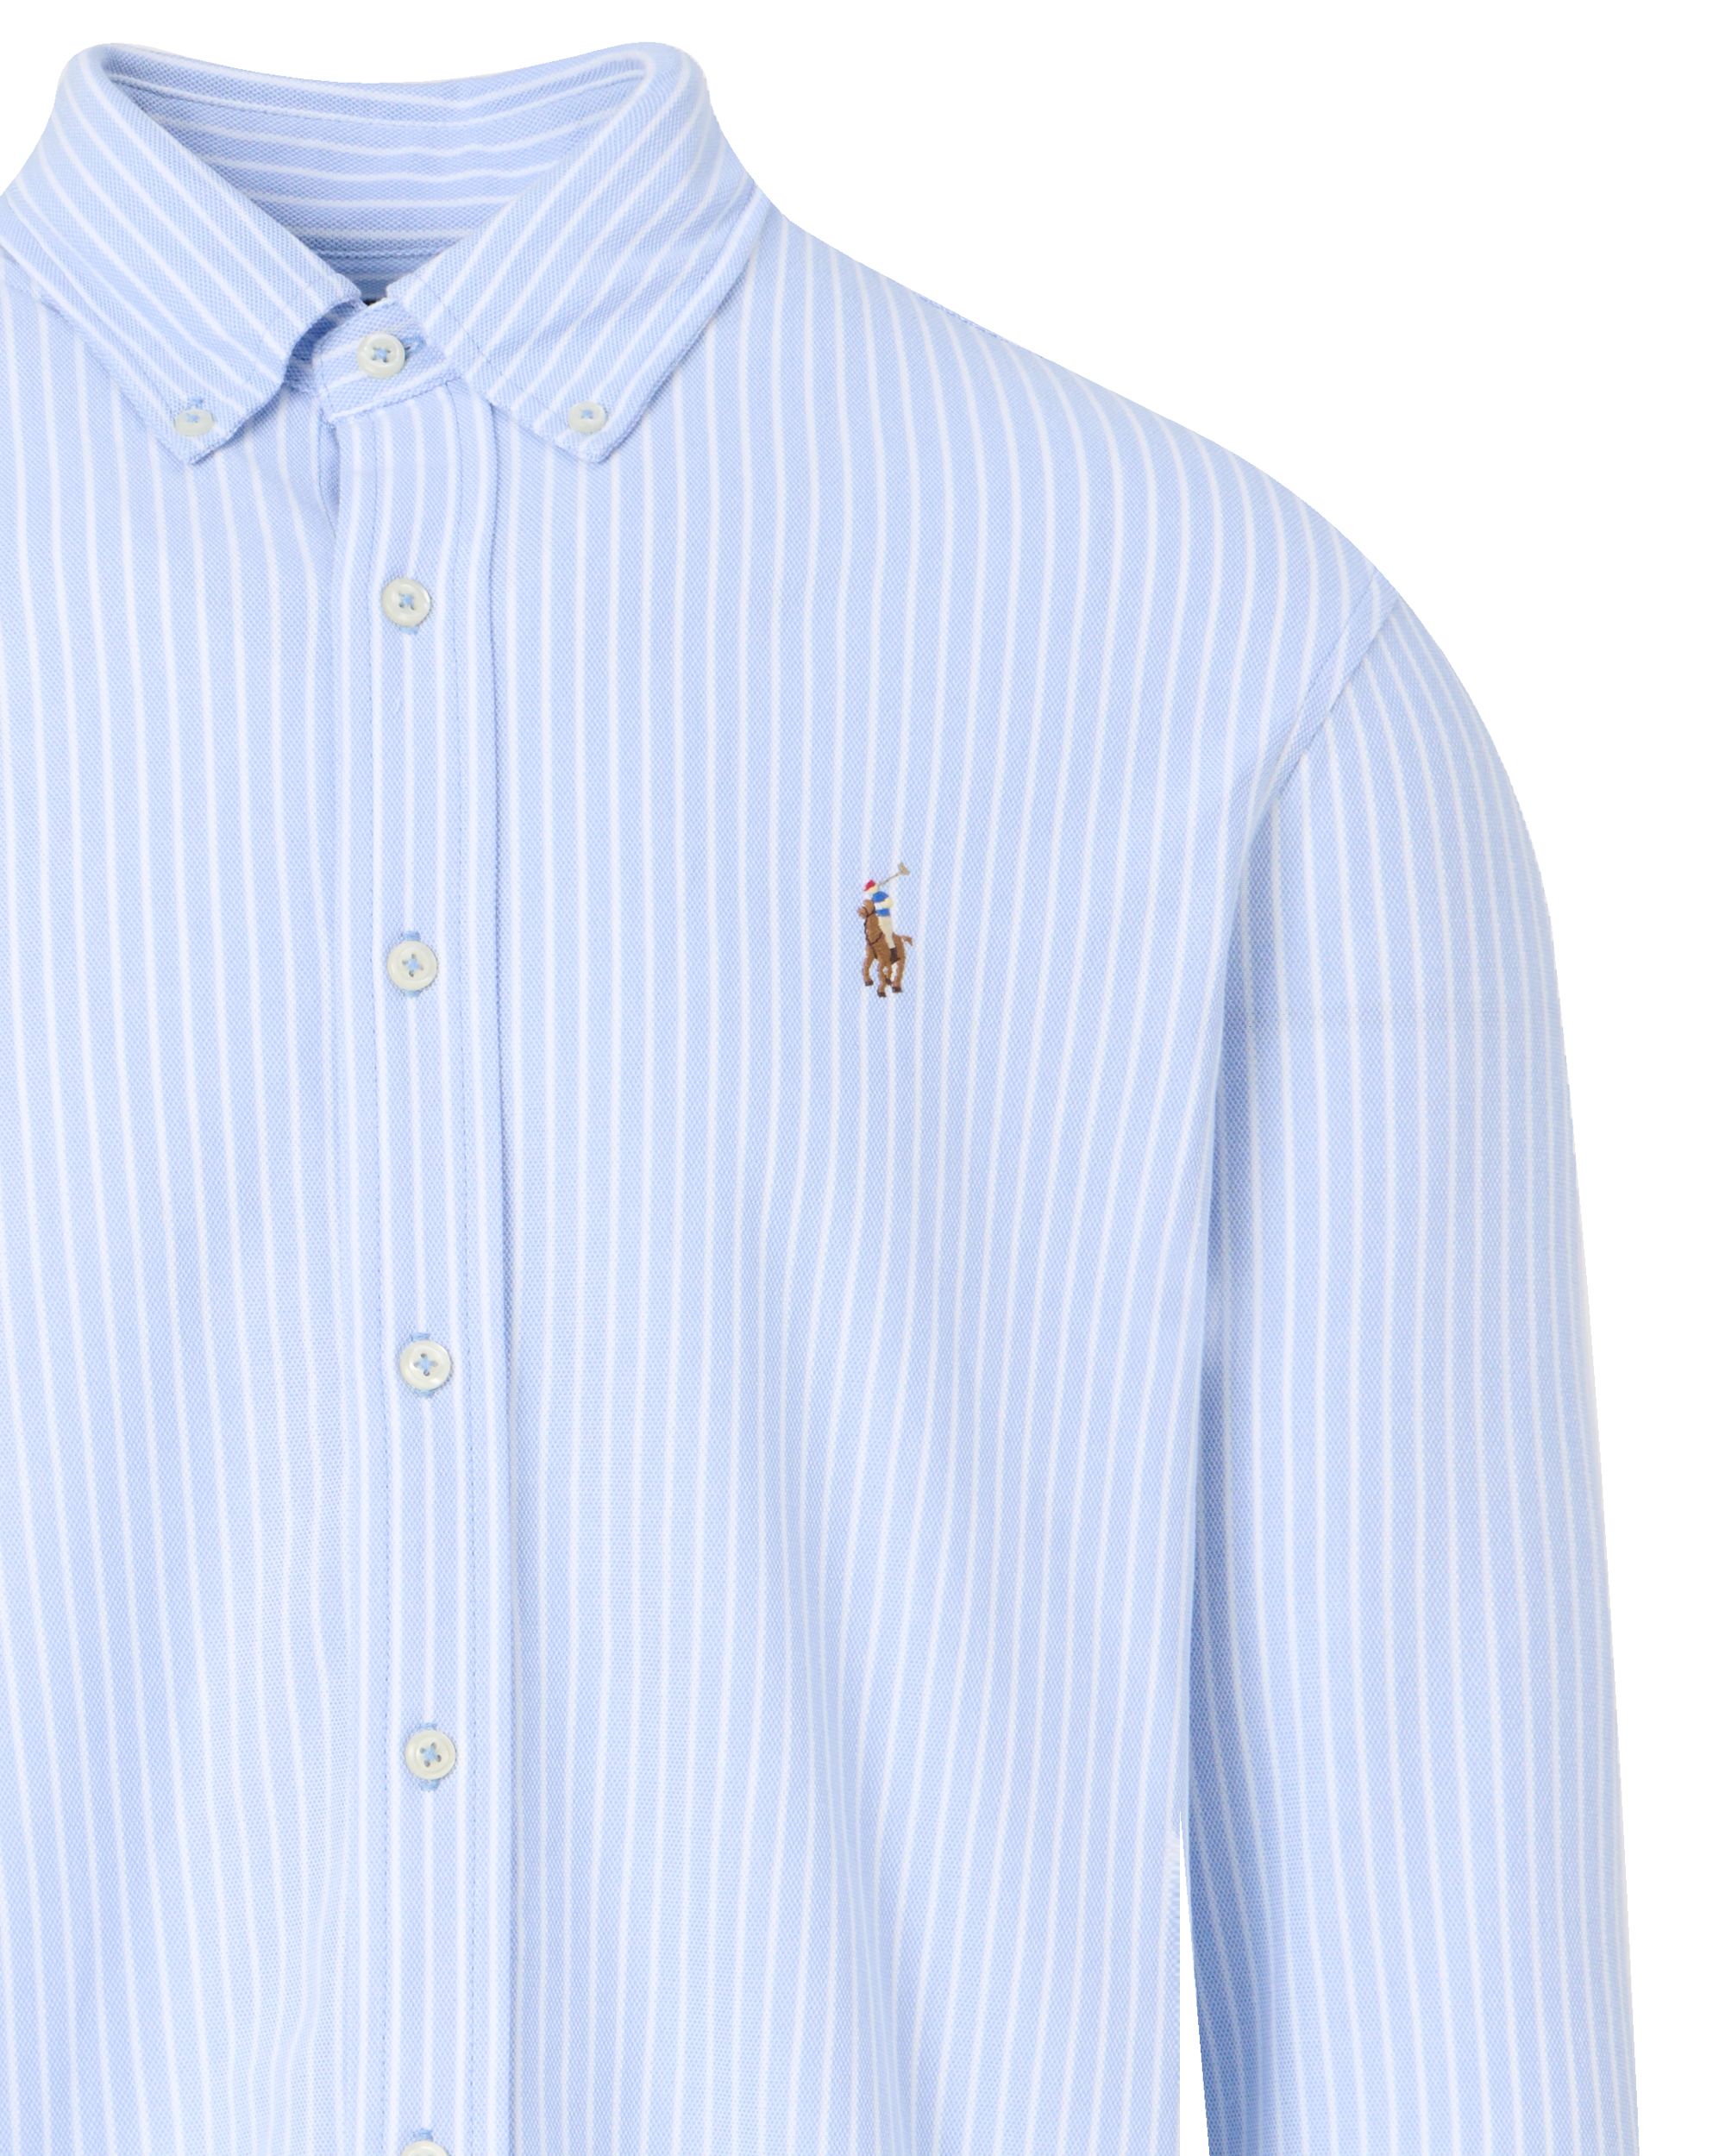 Polo Ralph Lauren Casual Overhemd LM Blauw 095274-001-L